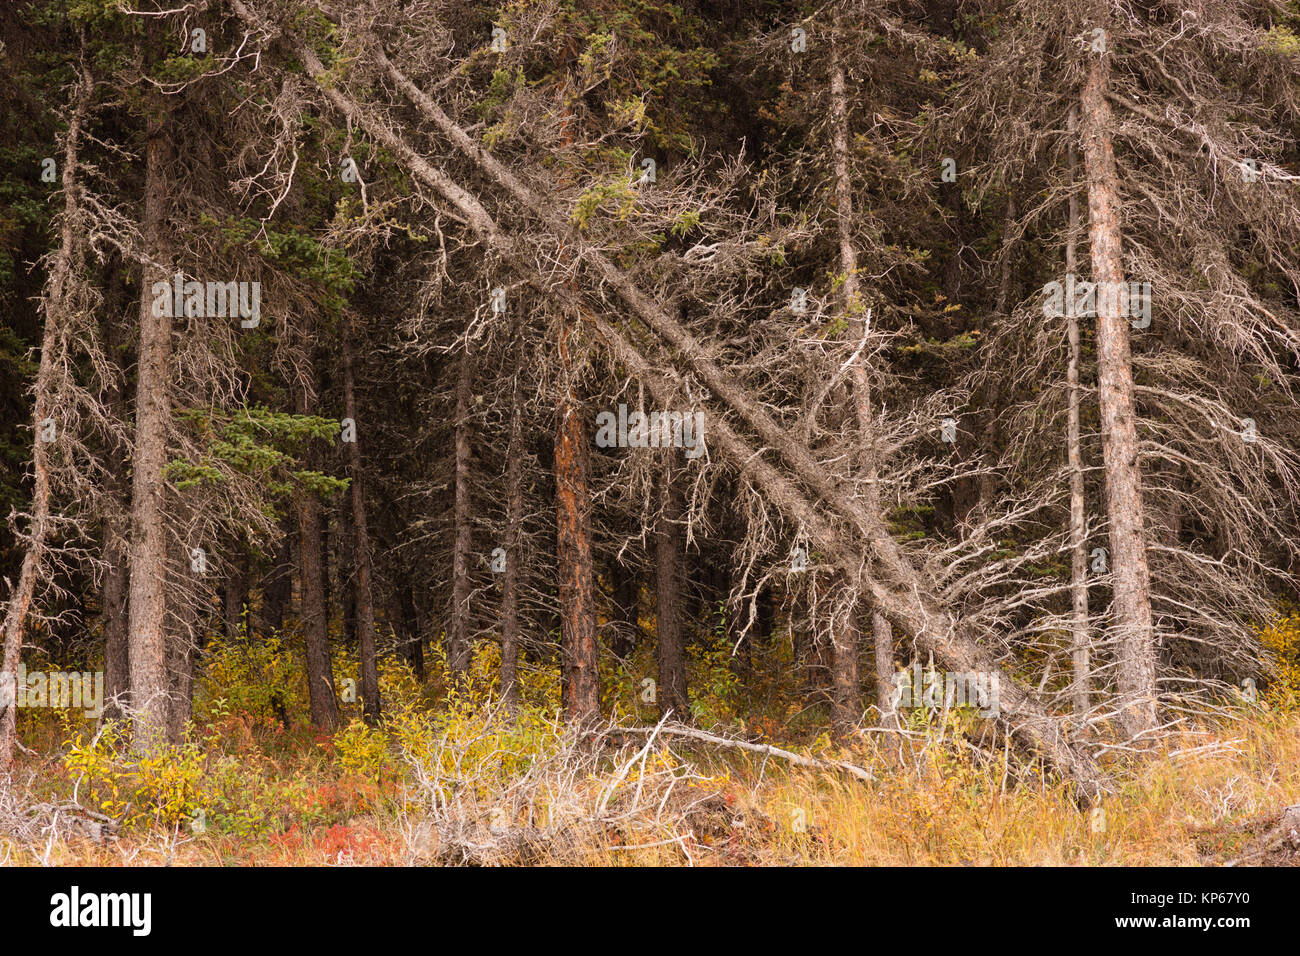 Dead Trees Fall Over Natural Forest Regenertation Stock Photo